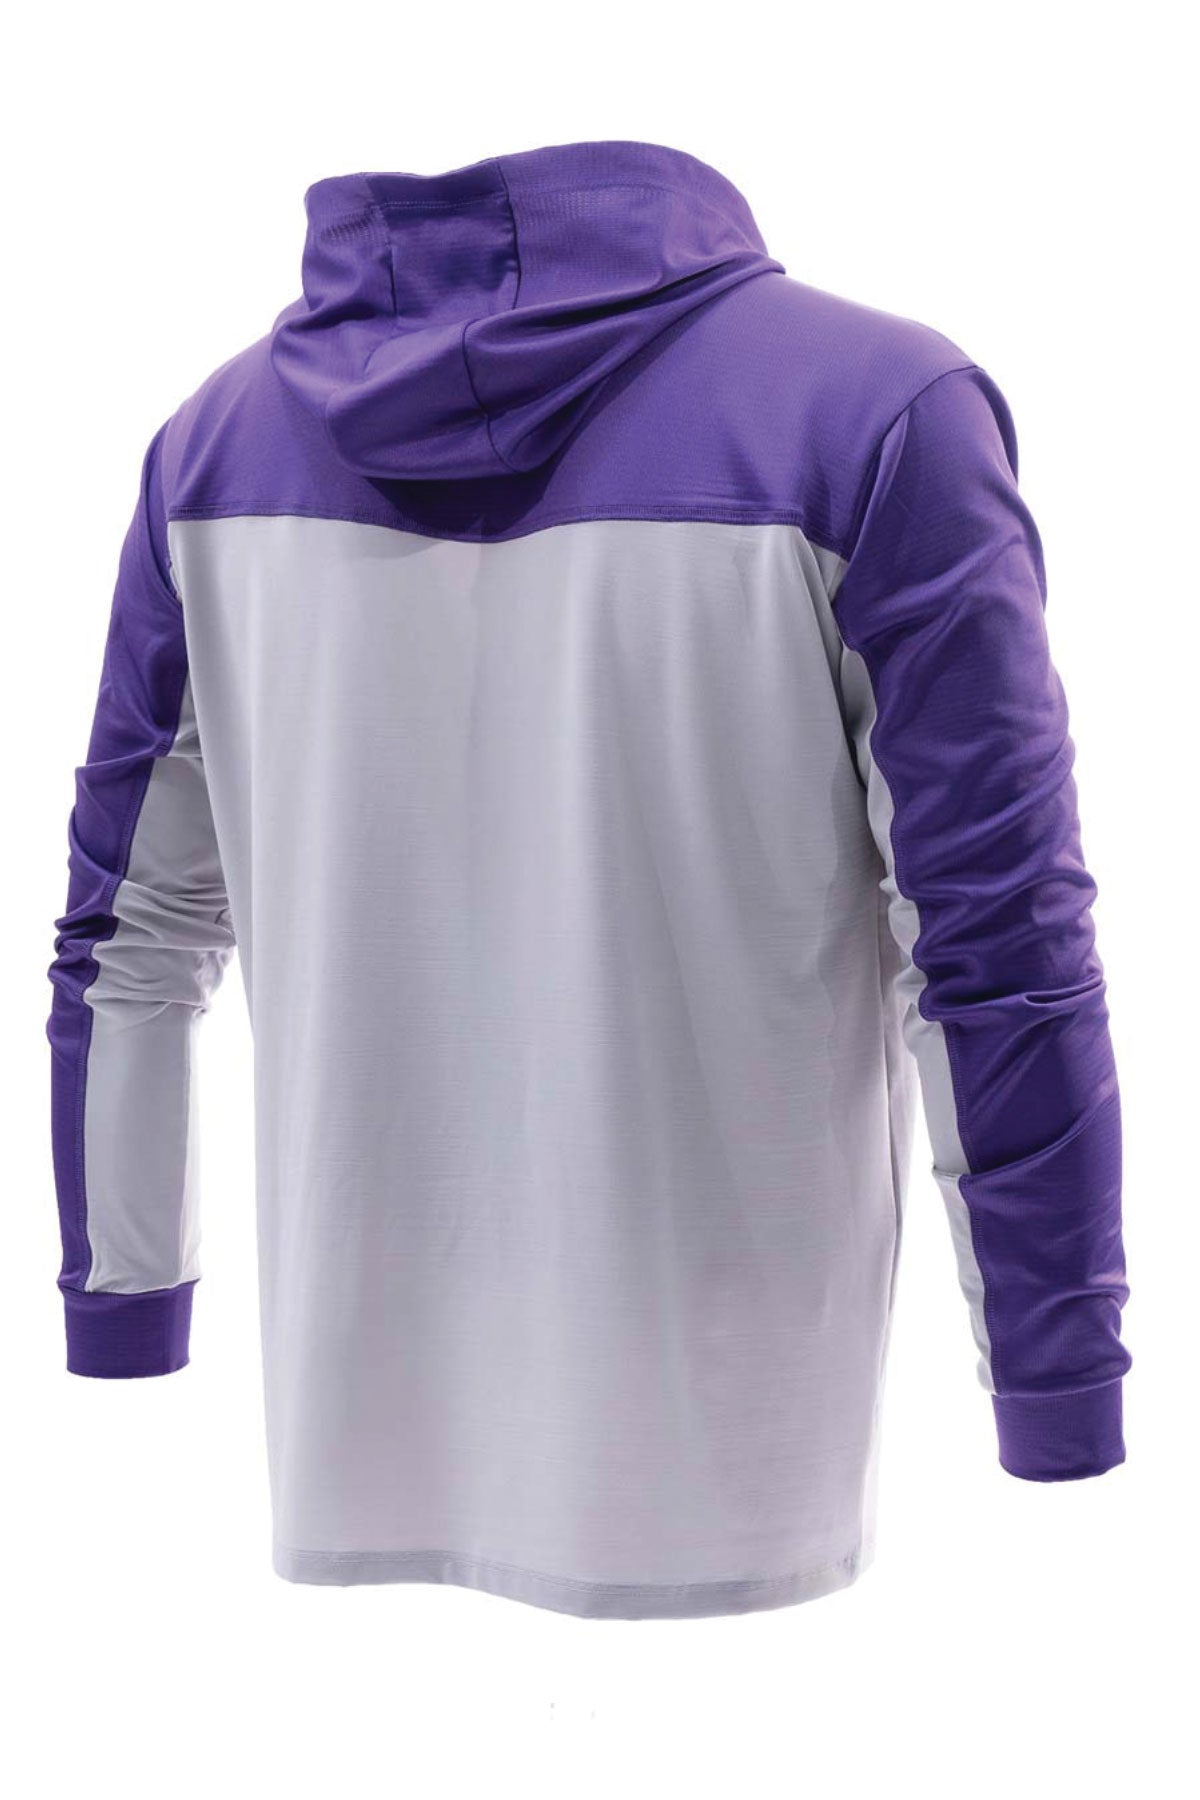 Outrigger Men's Hooded Long Sleeve Fisherman Sailor Purple UV Protected  Shirt